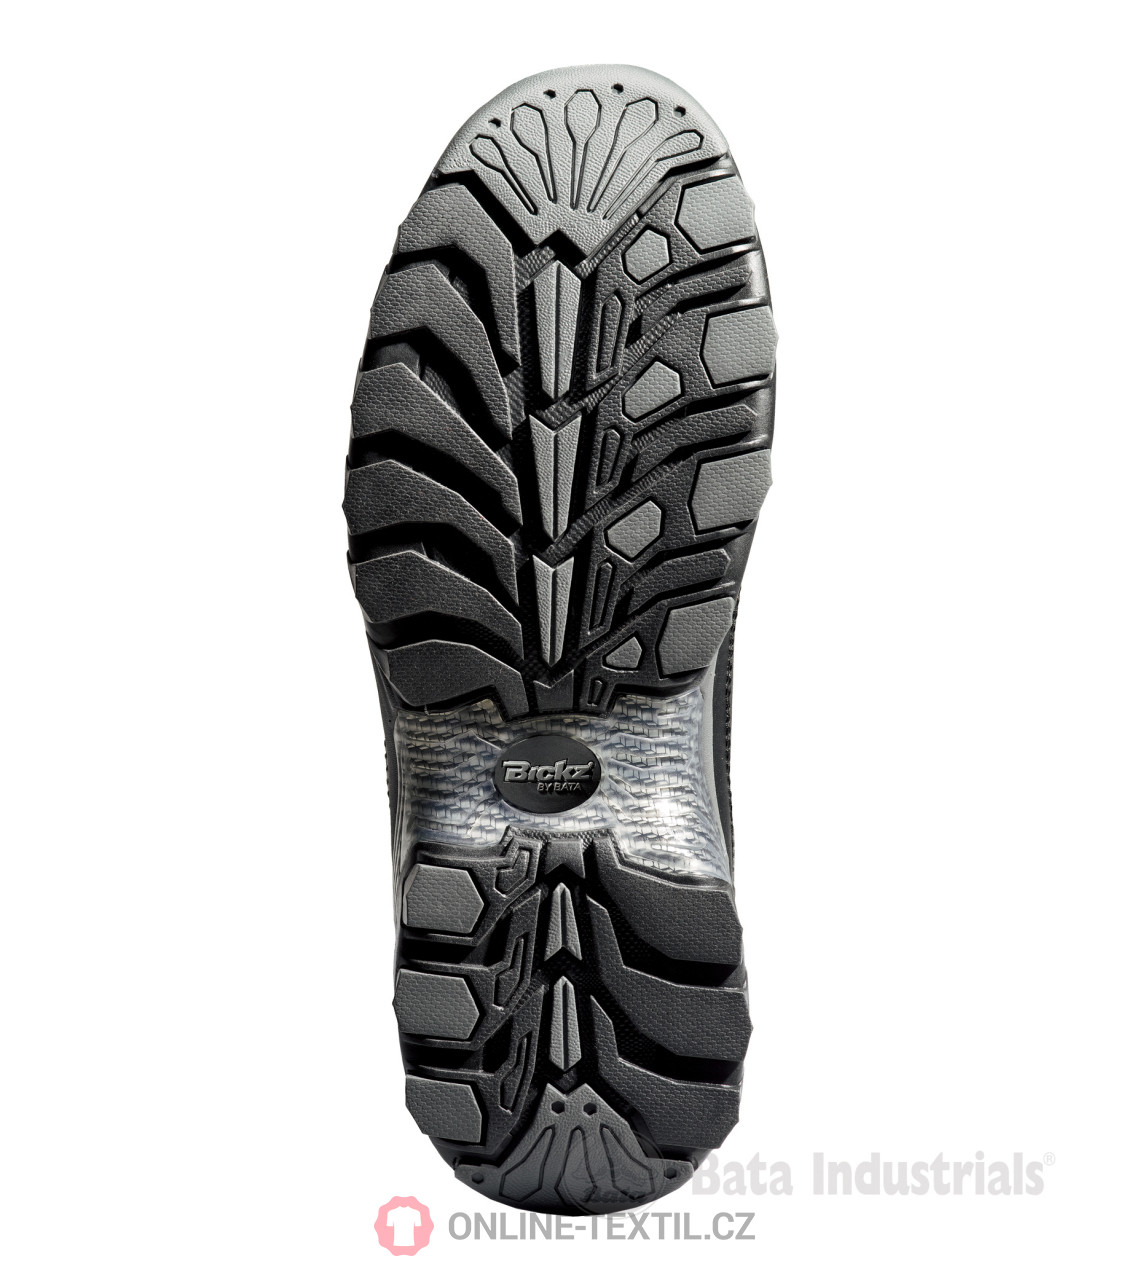 Bata Industrials Safety footwear S3 Bickz W Bata Industrials B48 - gray from the collection | ONLINE-TEXTIL.COM